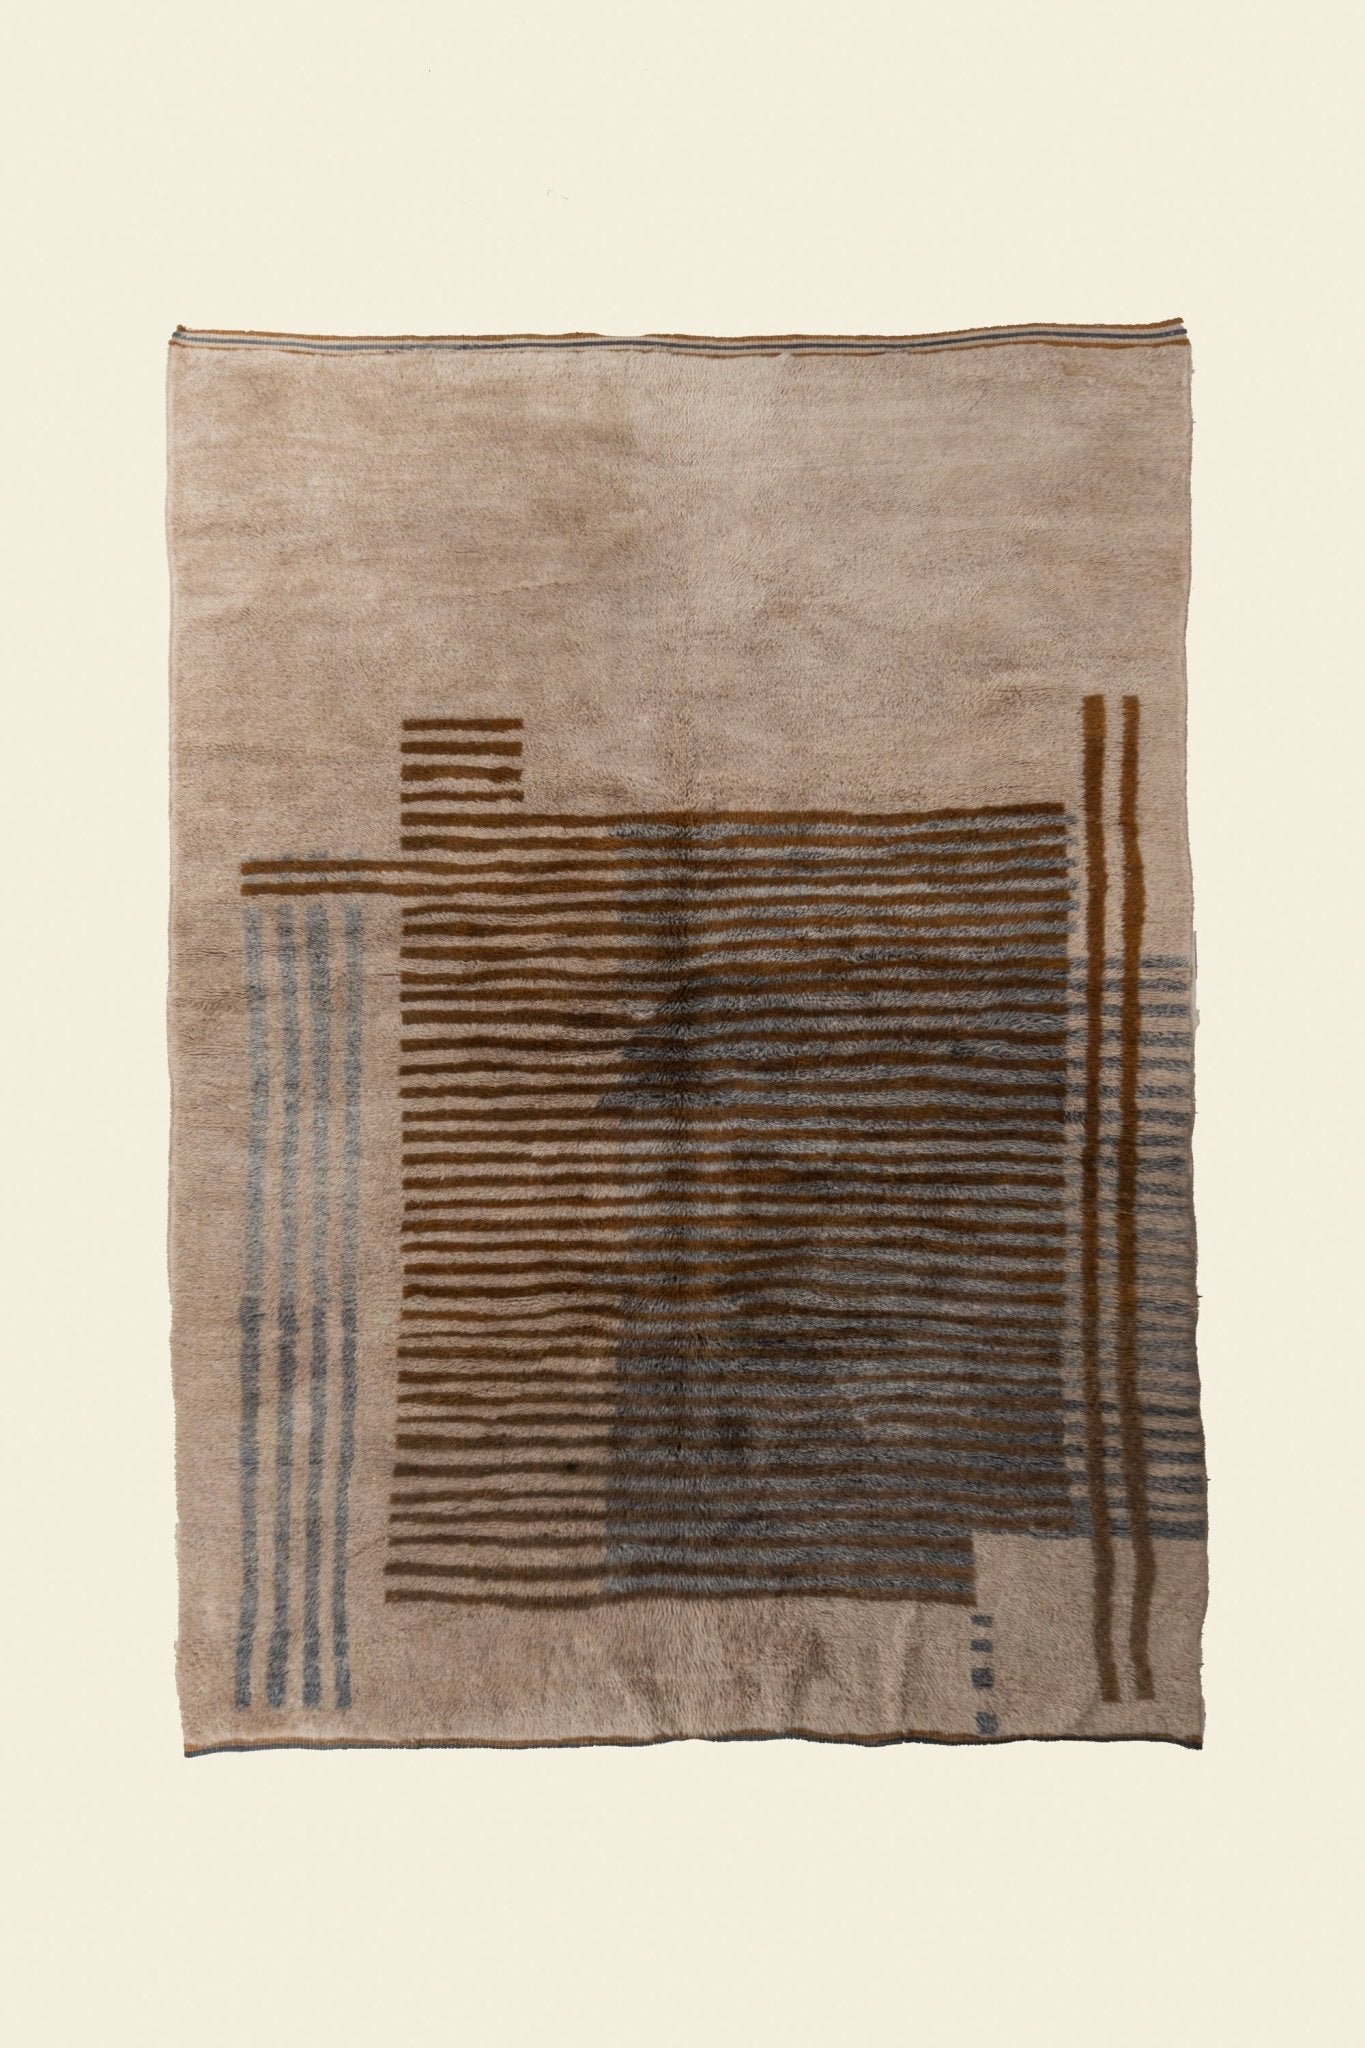 Contemporary Beni Mrirt Berber Rug 7'41" x 10'26" - 226 cm x 313 cm (Wool) - Dar Bouchaib Marrakech